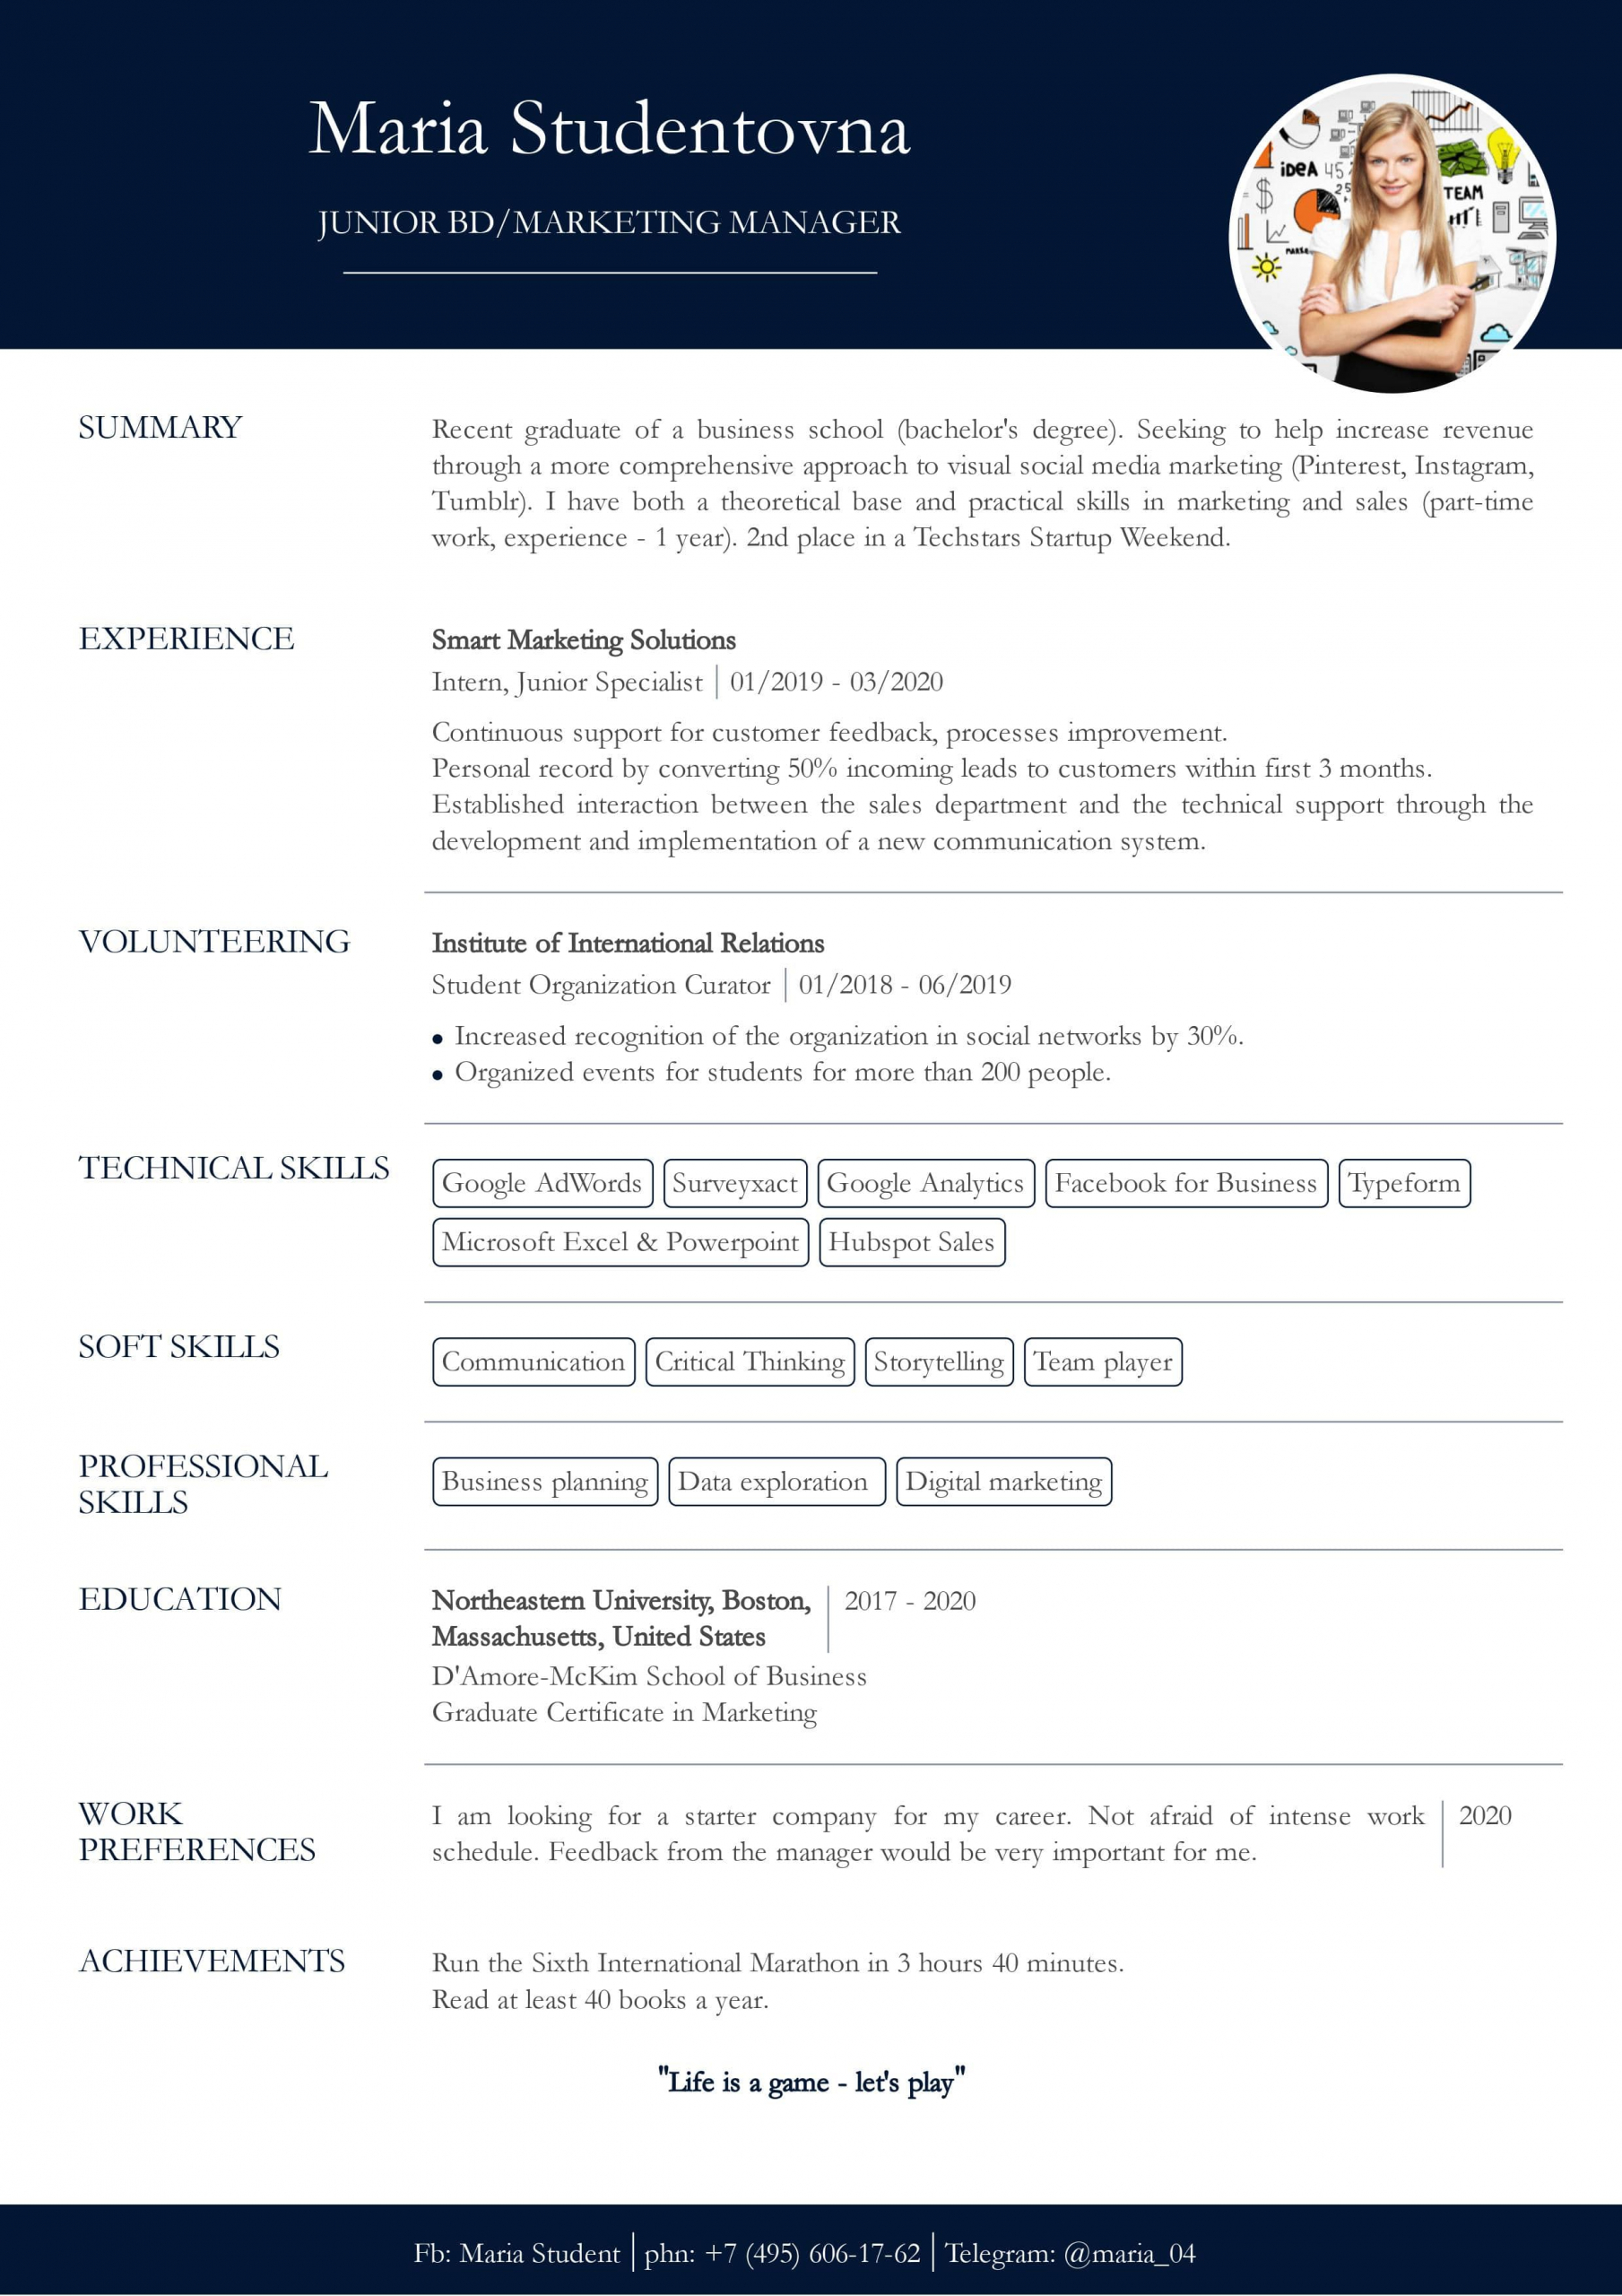 Sample resume marketing manager 2020